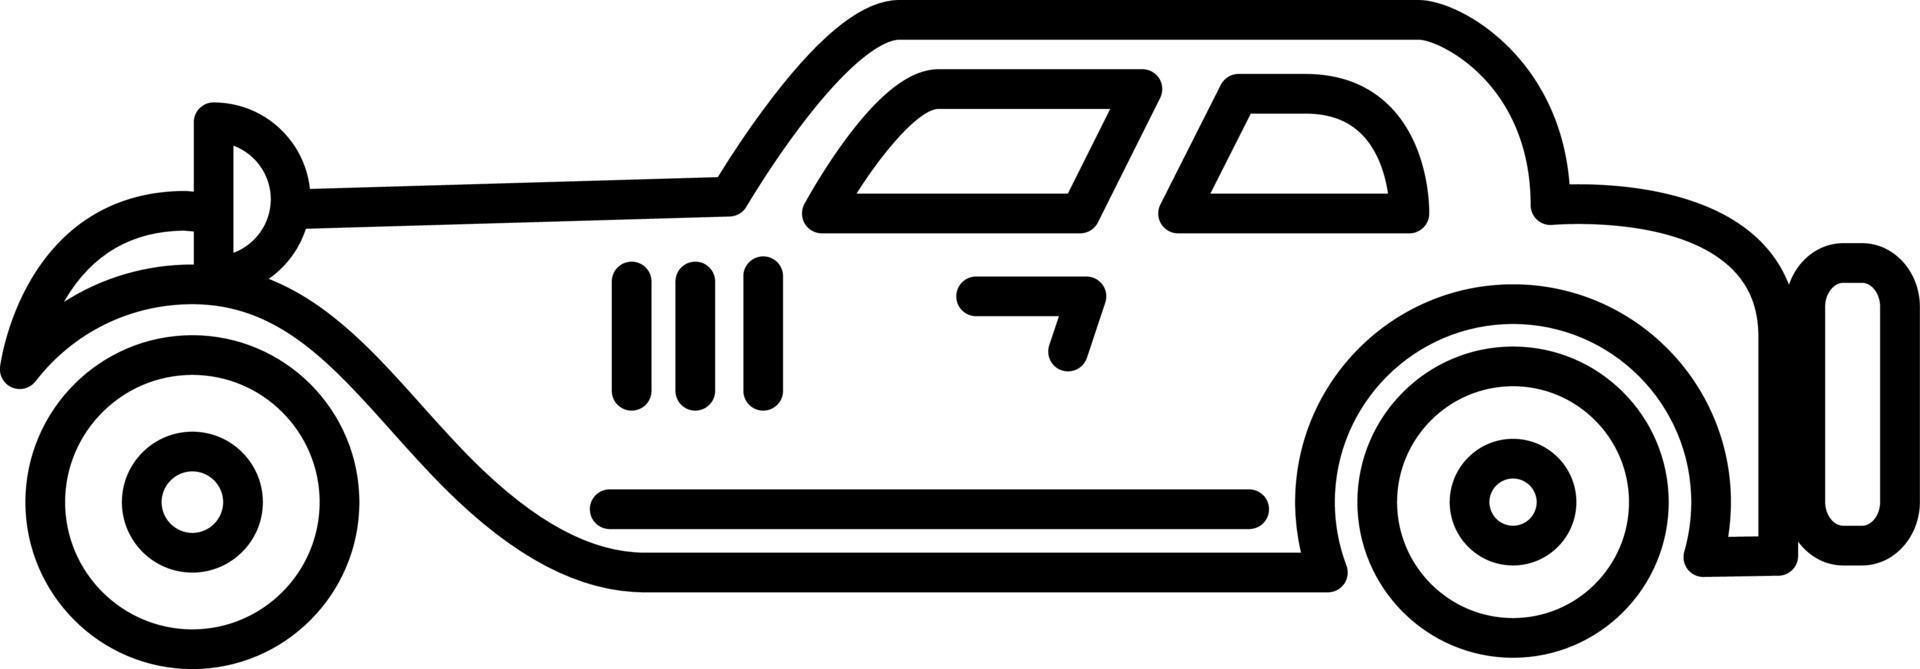 Passenger car black icon. vector